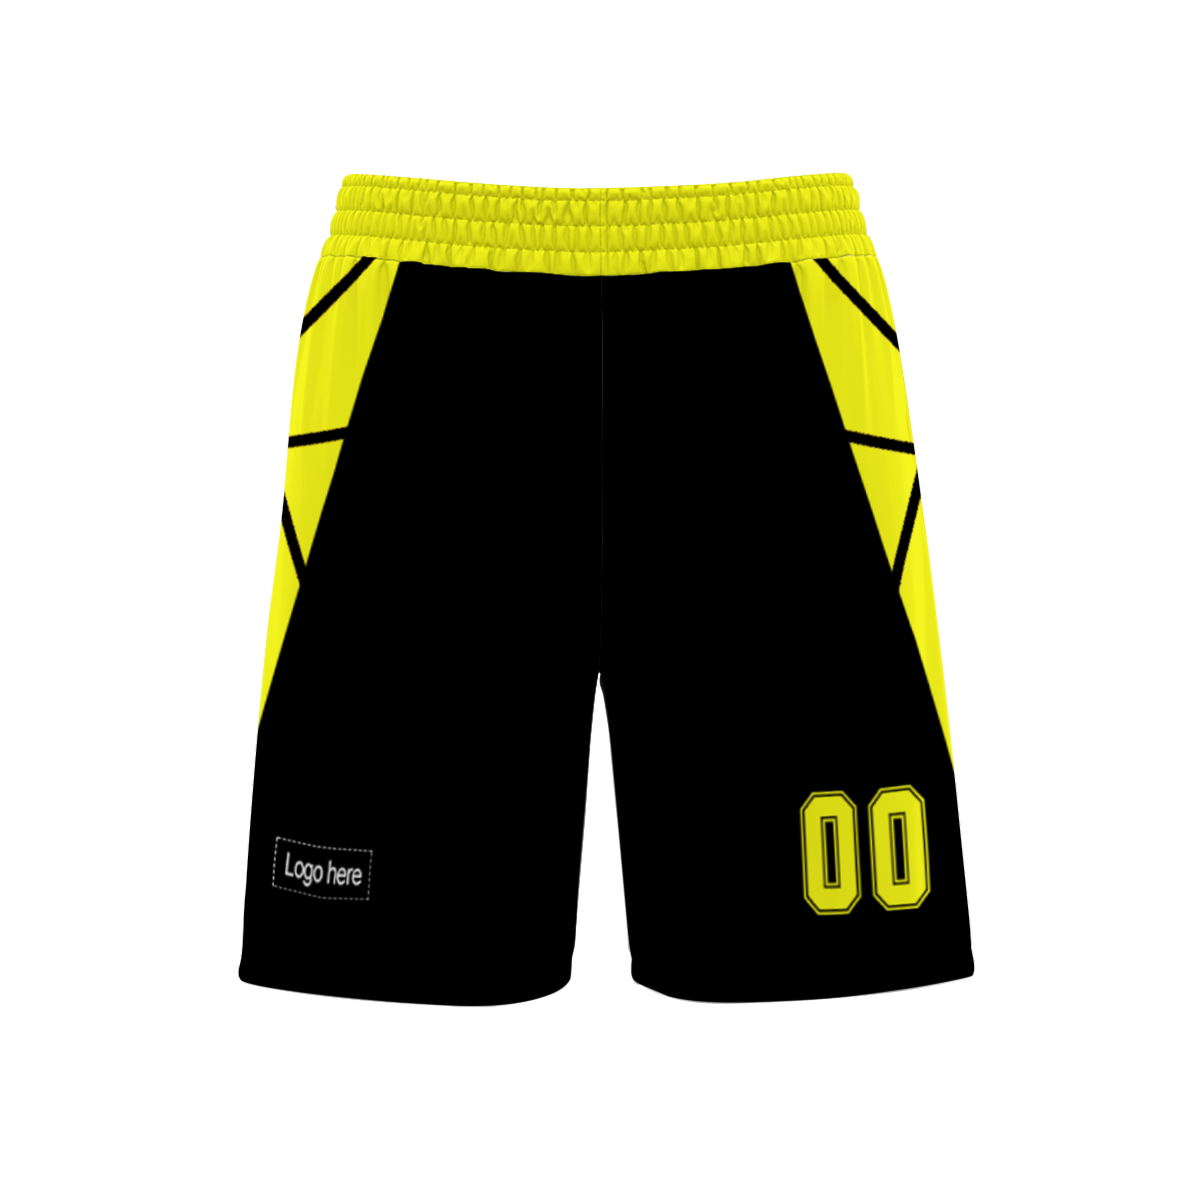 custom-design-printing-basketball-uniforms-men-women-sportswear-training-sublimation-basketball-jerseys-at-cj-pod-7